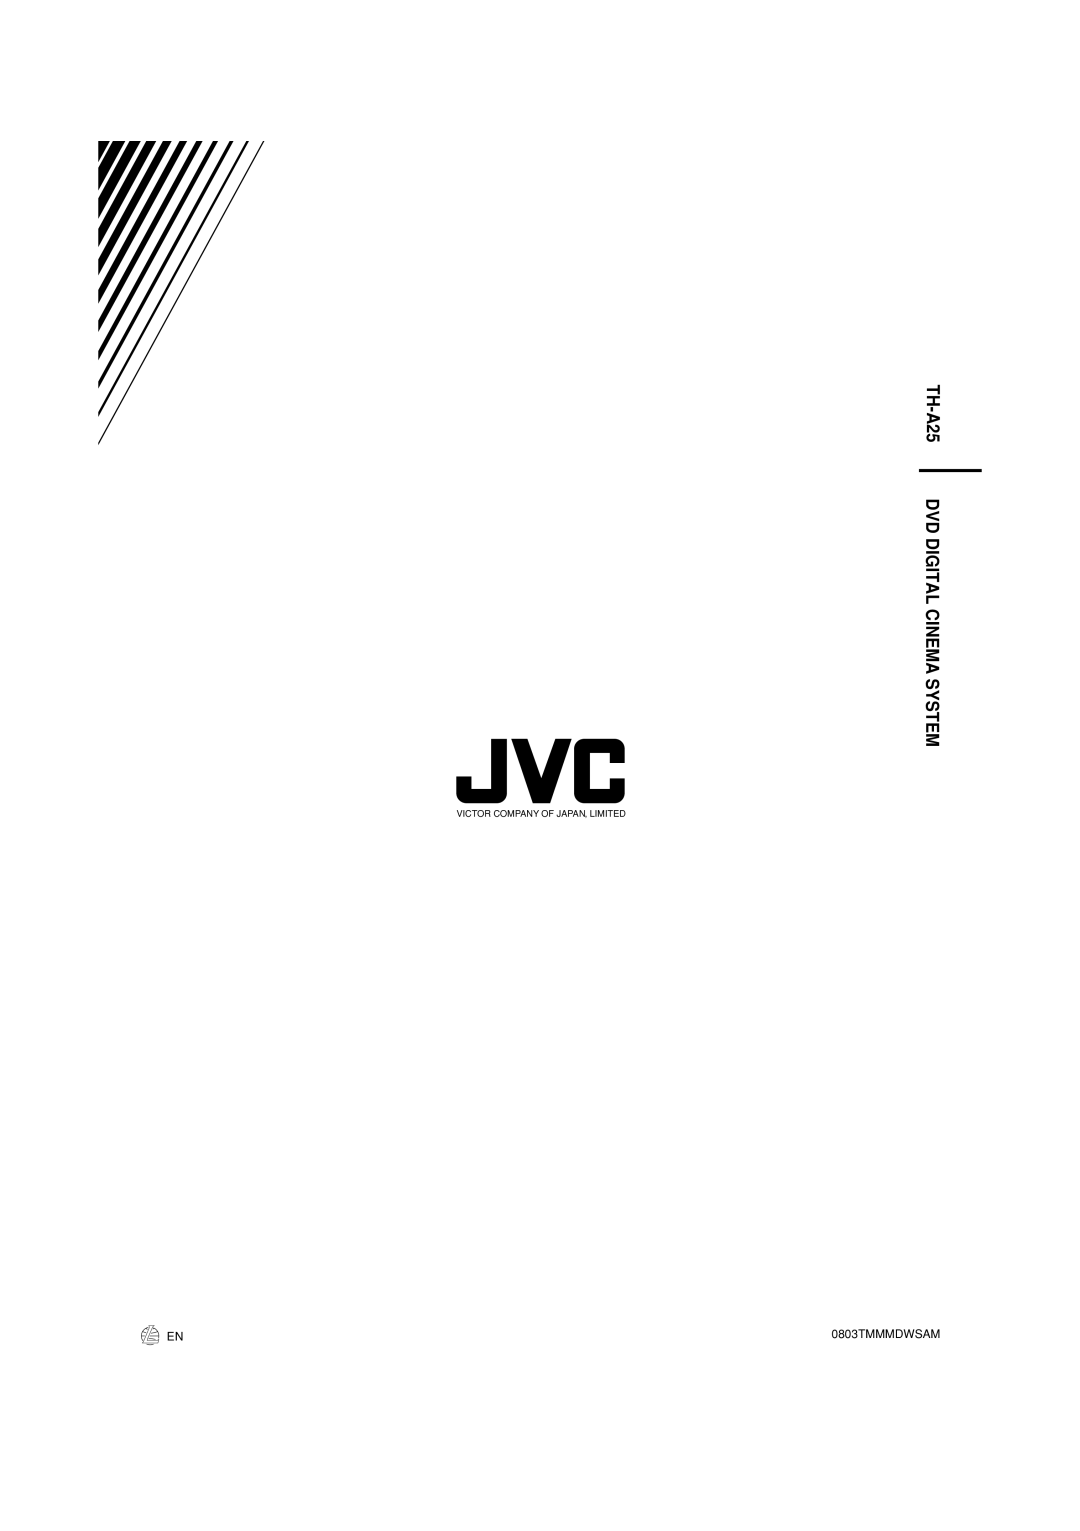 JVC manual TH-A25DVD DIGITAL CINEMA SYSTEM, 0803TMMMDWSAM, Victor Company Of Japan, Limited 